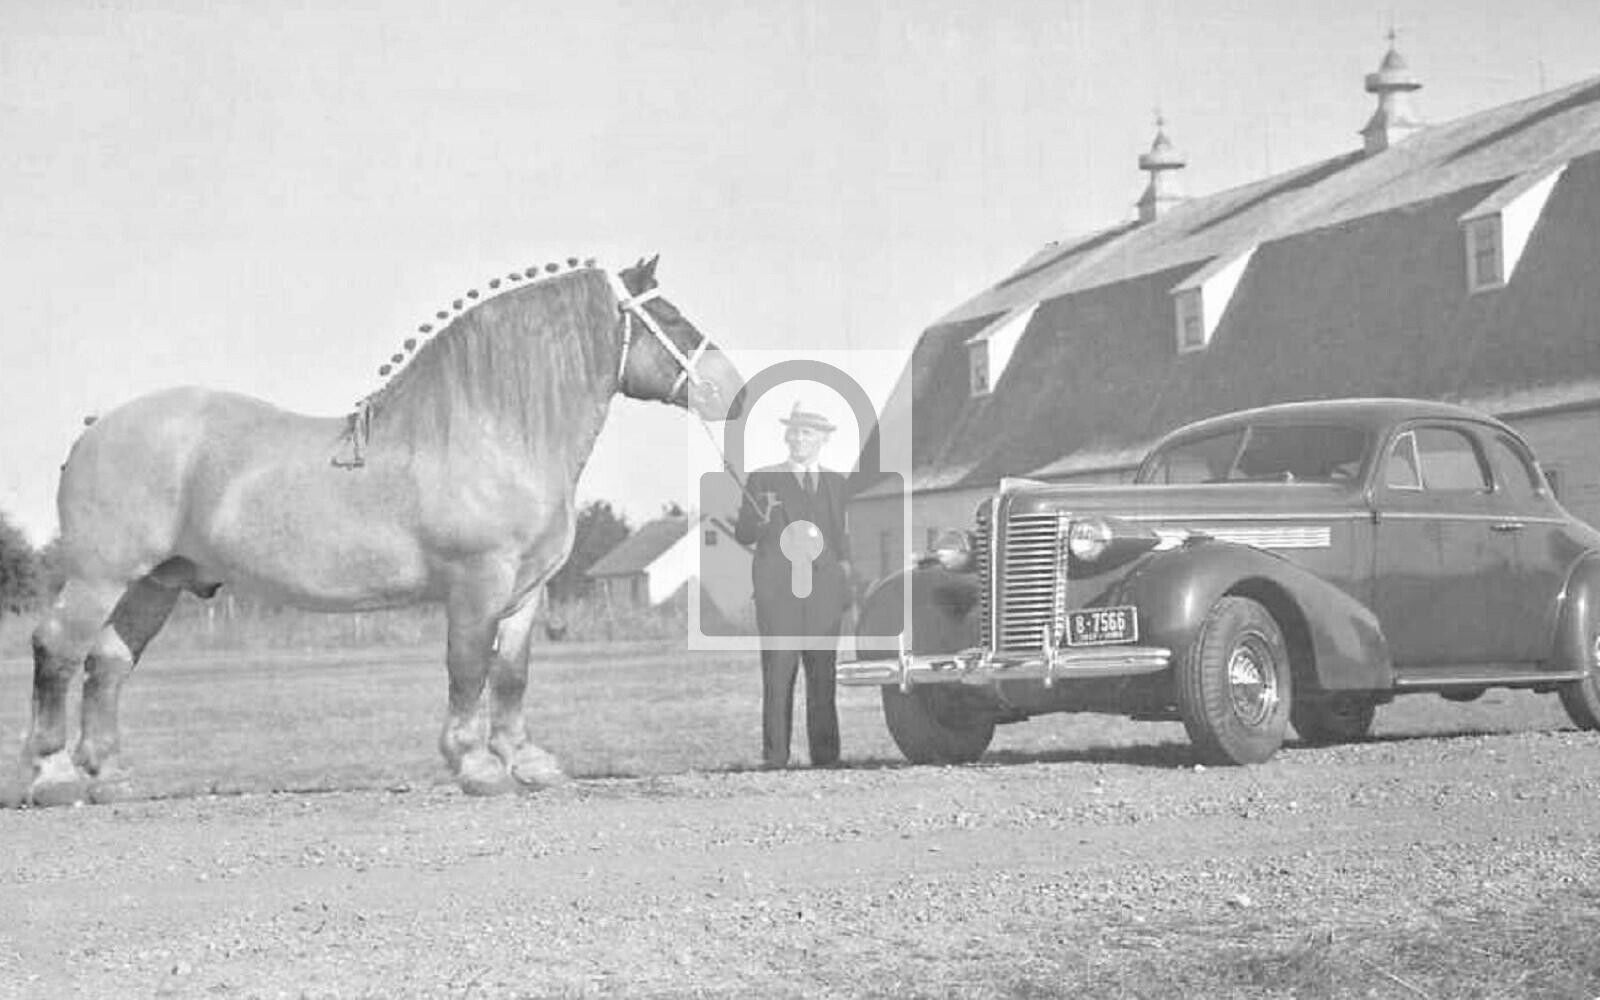 Brooklyn Supreme Worlds Largest Horse Callender Iowa IA Reprint Postcard